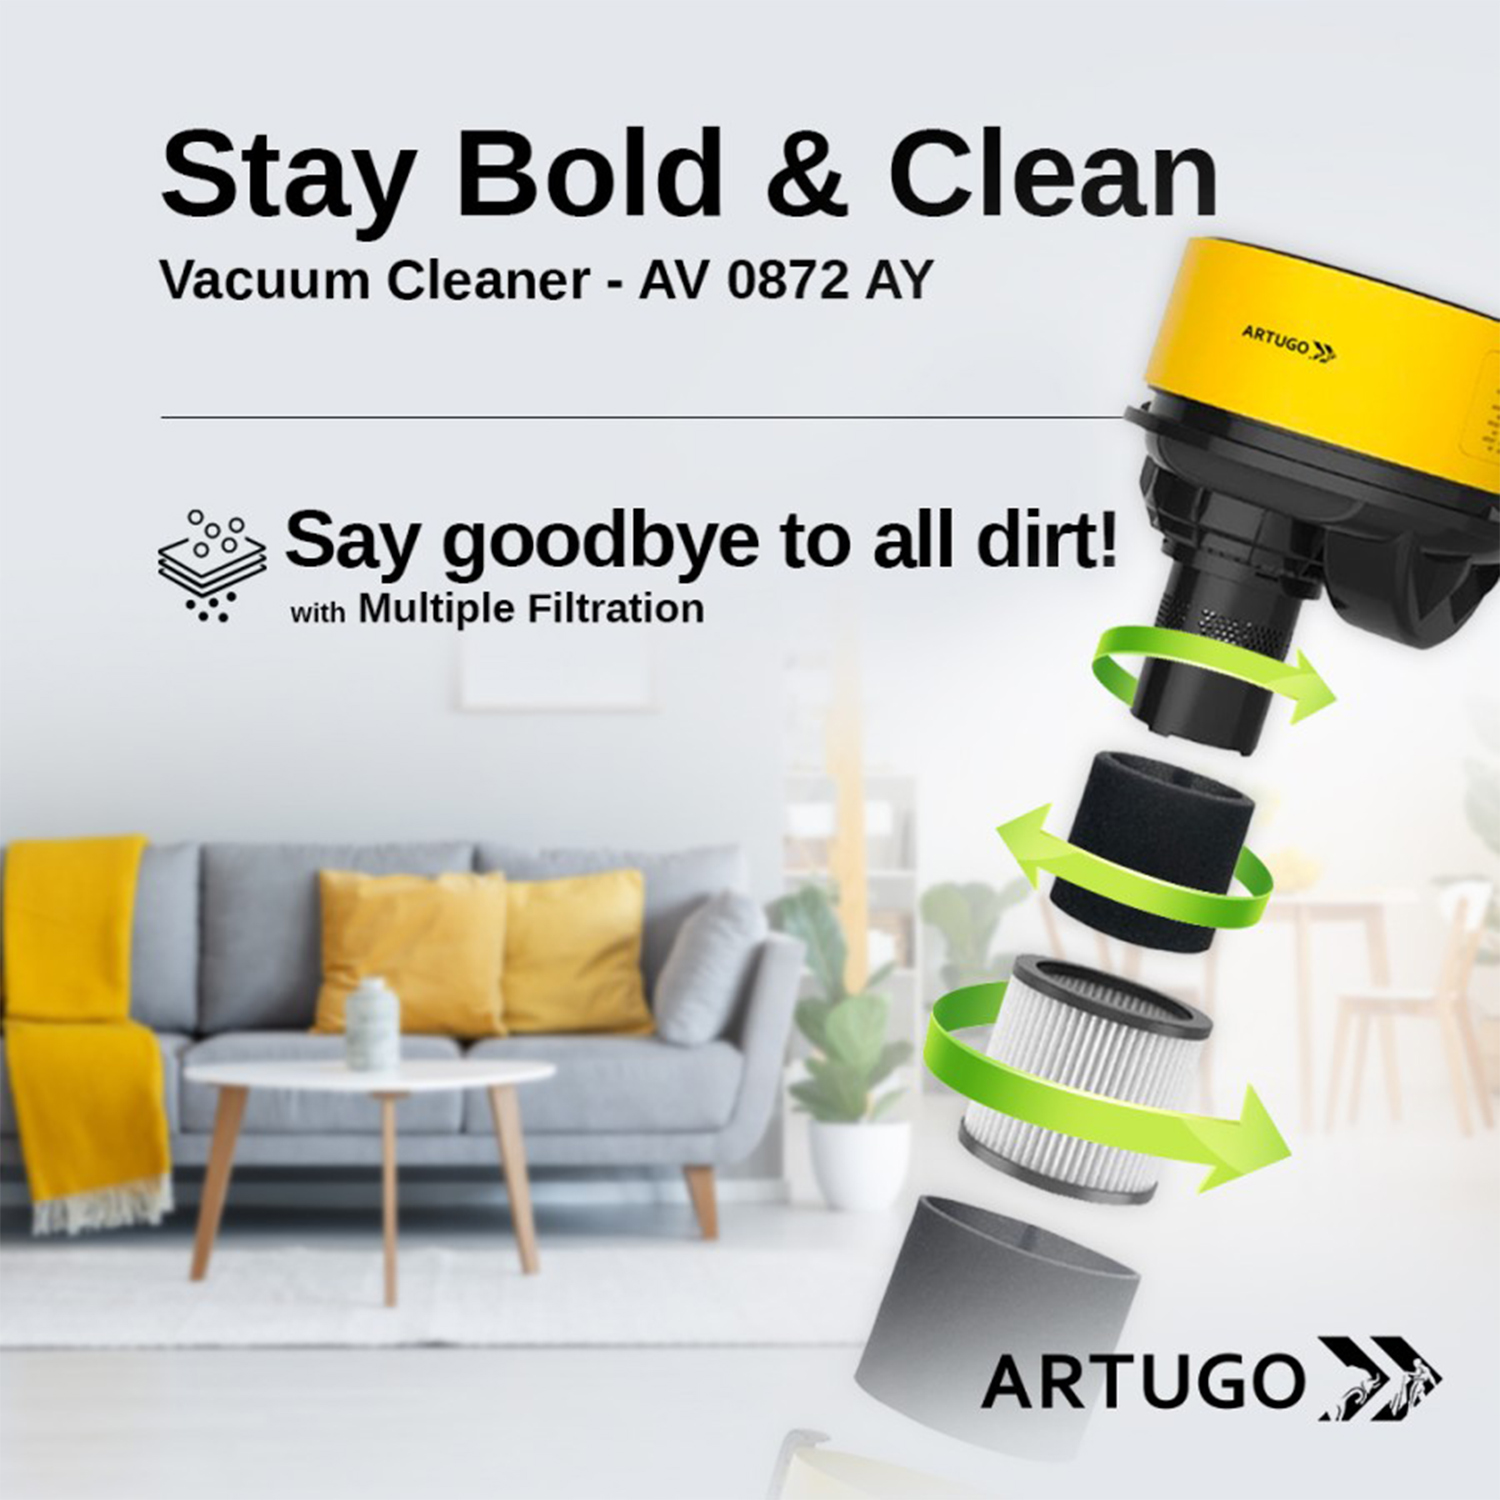 Artugo AV 0872 AY Vacuum Cleaner 8L Wet and Dry - Penyedot Debu